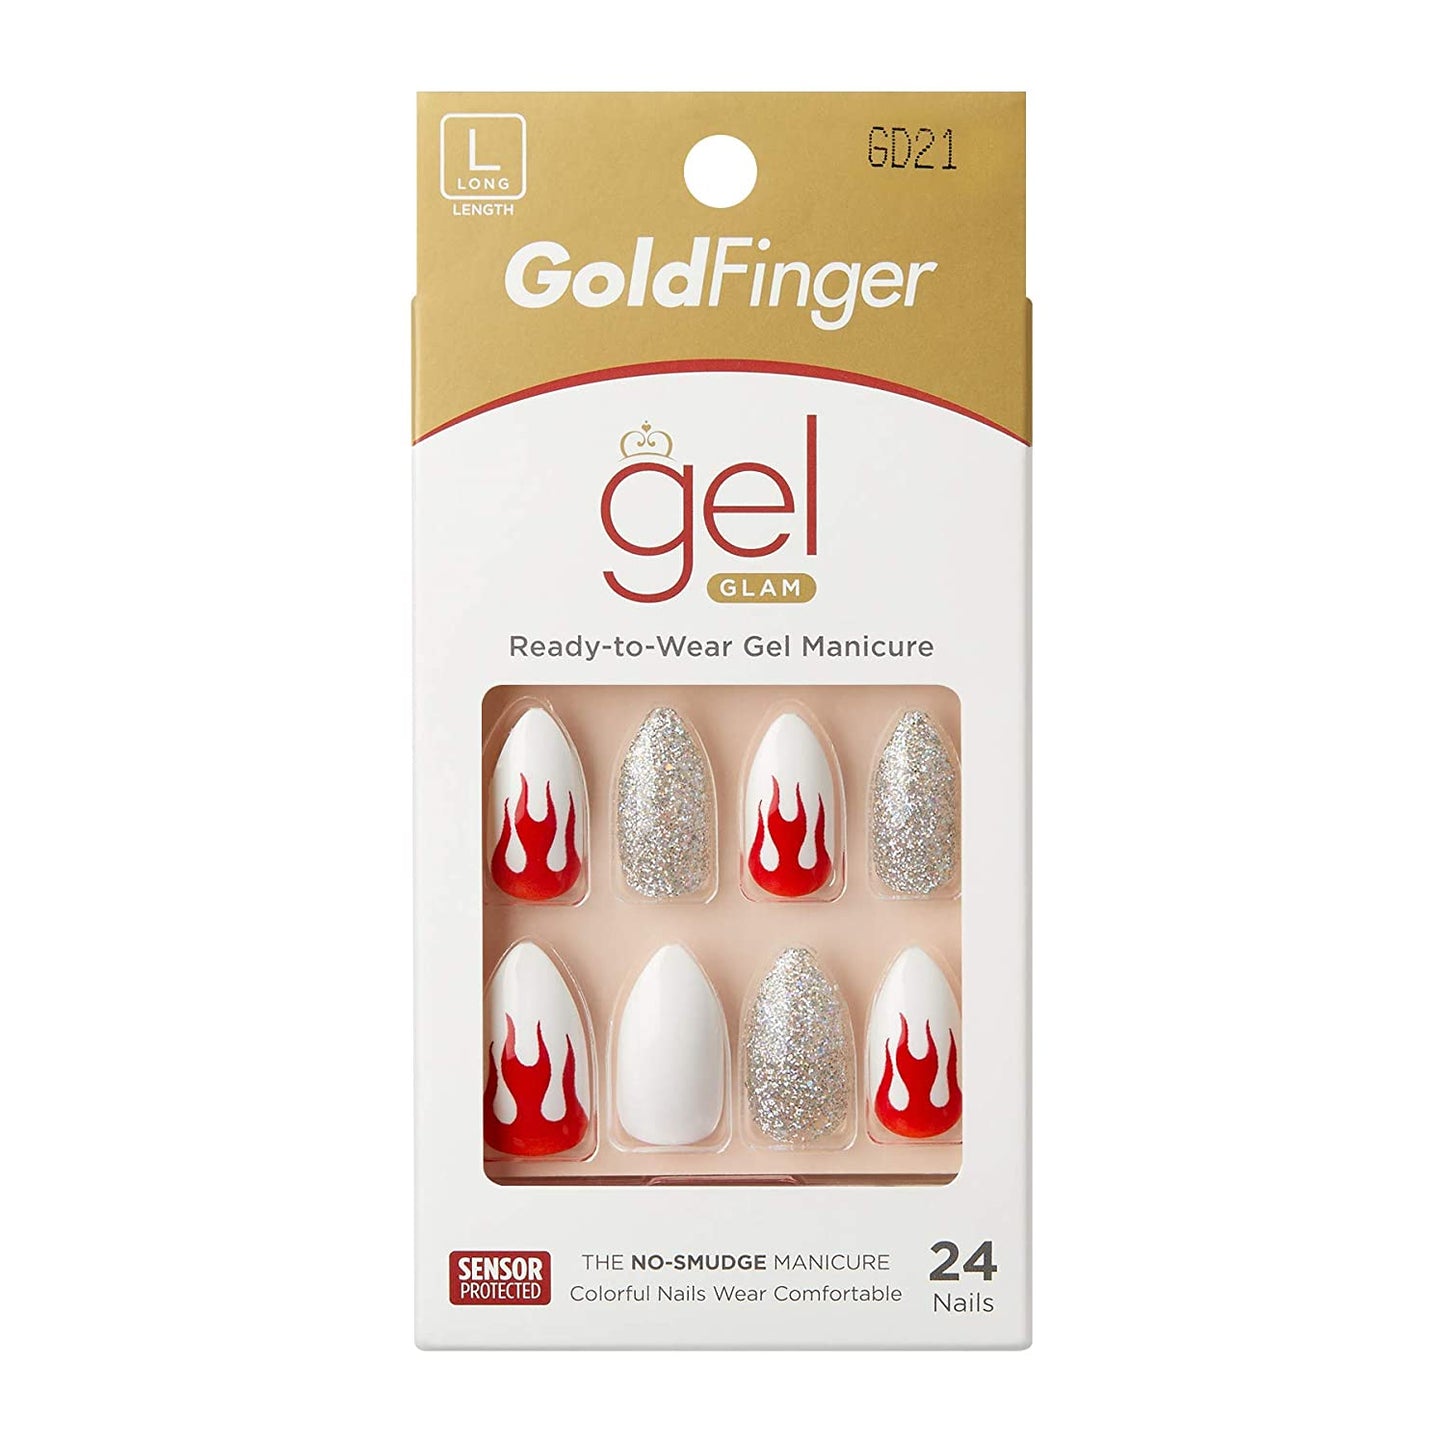 KISS GoldFinger Gel Glam Manicure Nails GD21